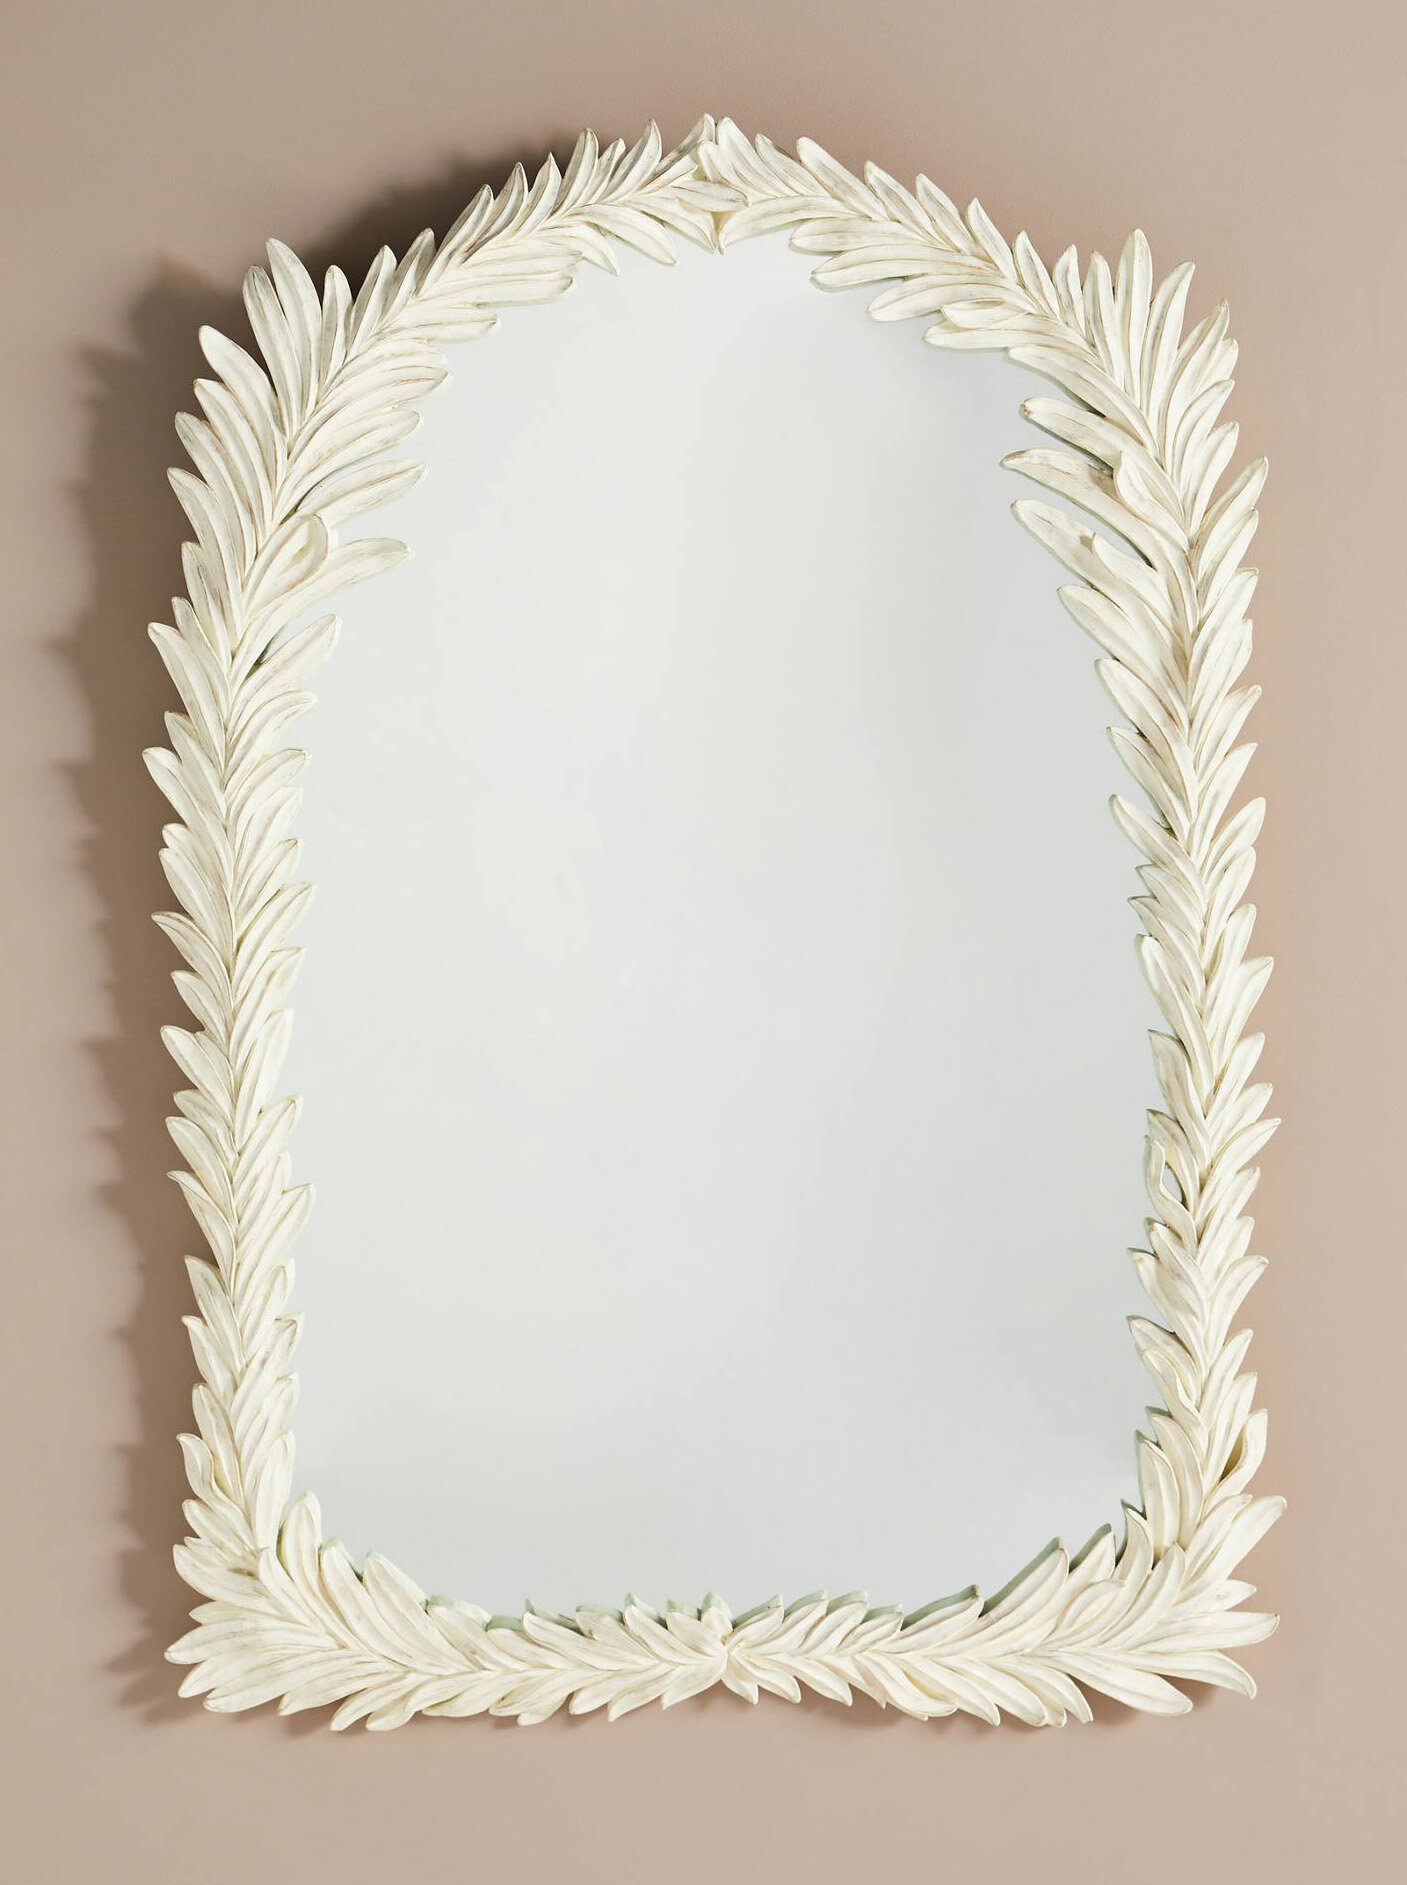 Beautiful white leaf mirror